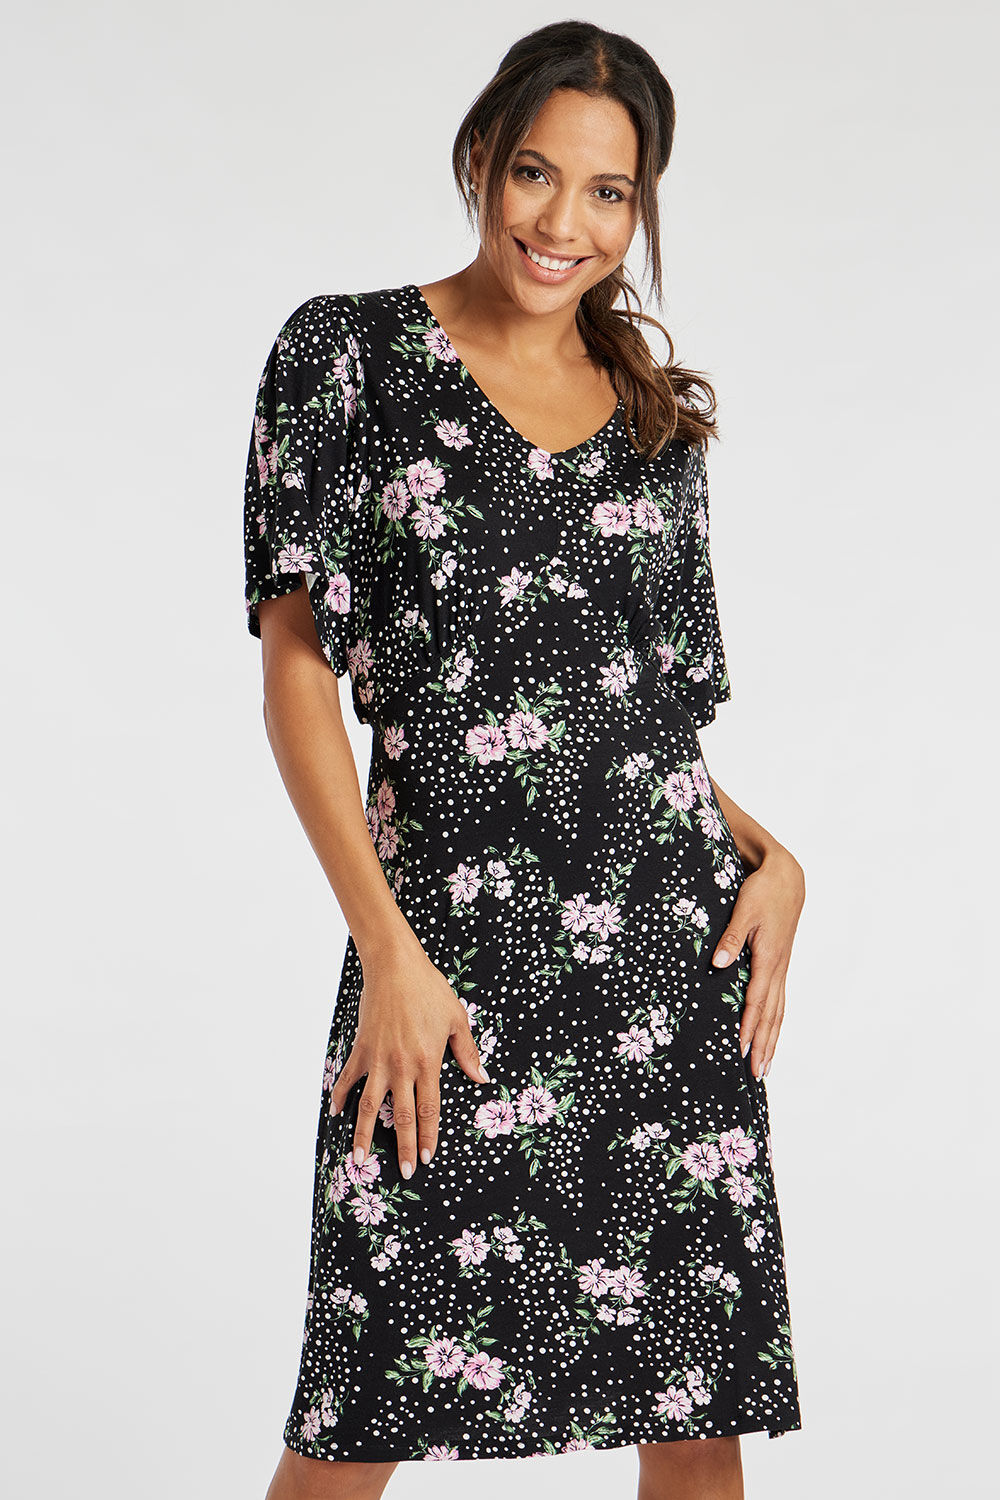 Bonmarche Black Floral Spot Print Jersey Tea Dress, Size: 12